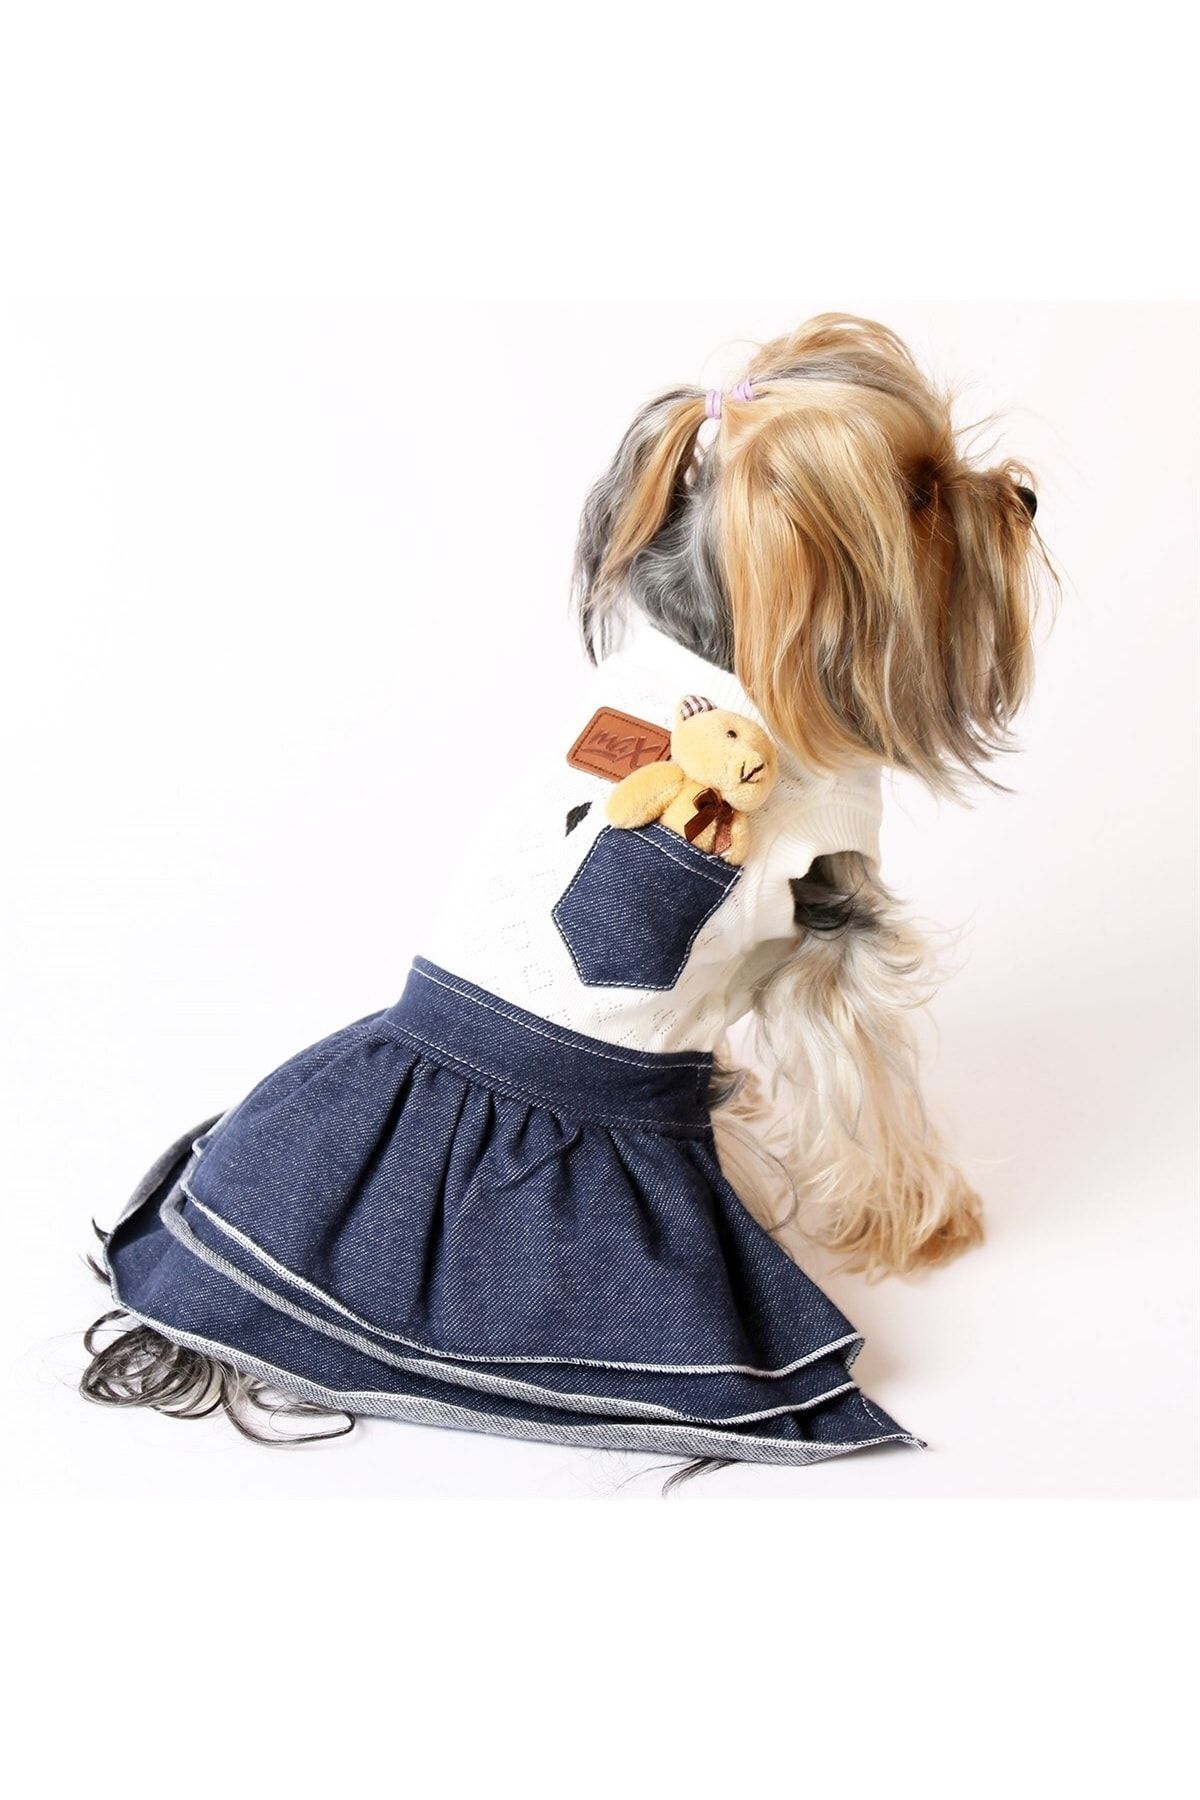 MAXSTYLESPET Pet Ayıcık Elbise - Lacivert Köpek Ve Kedi Kıyafeti